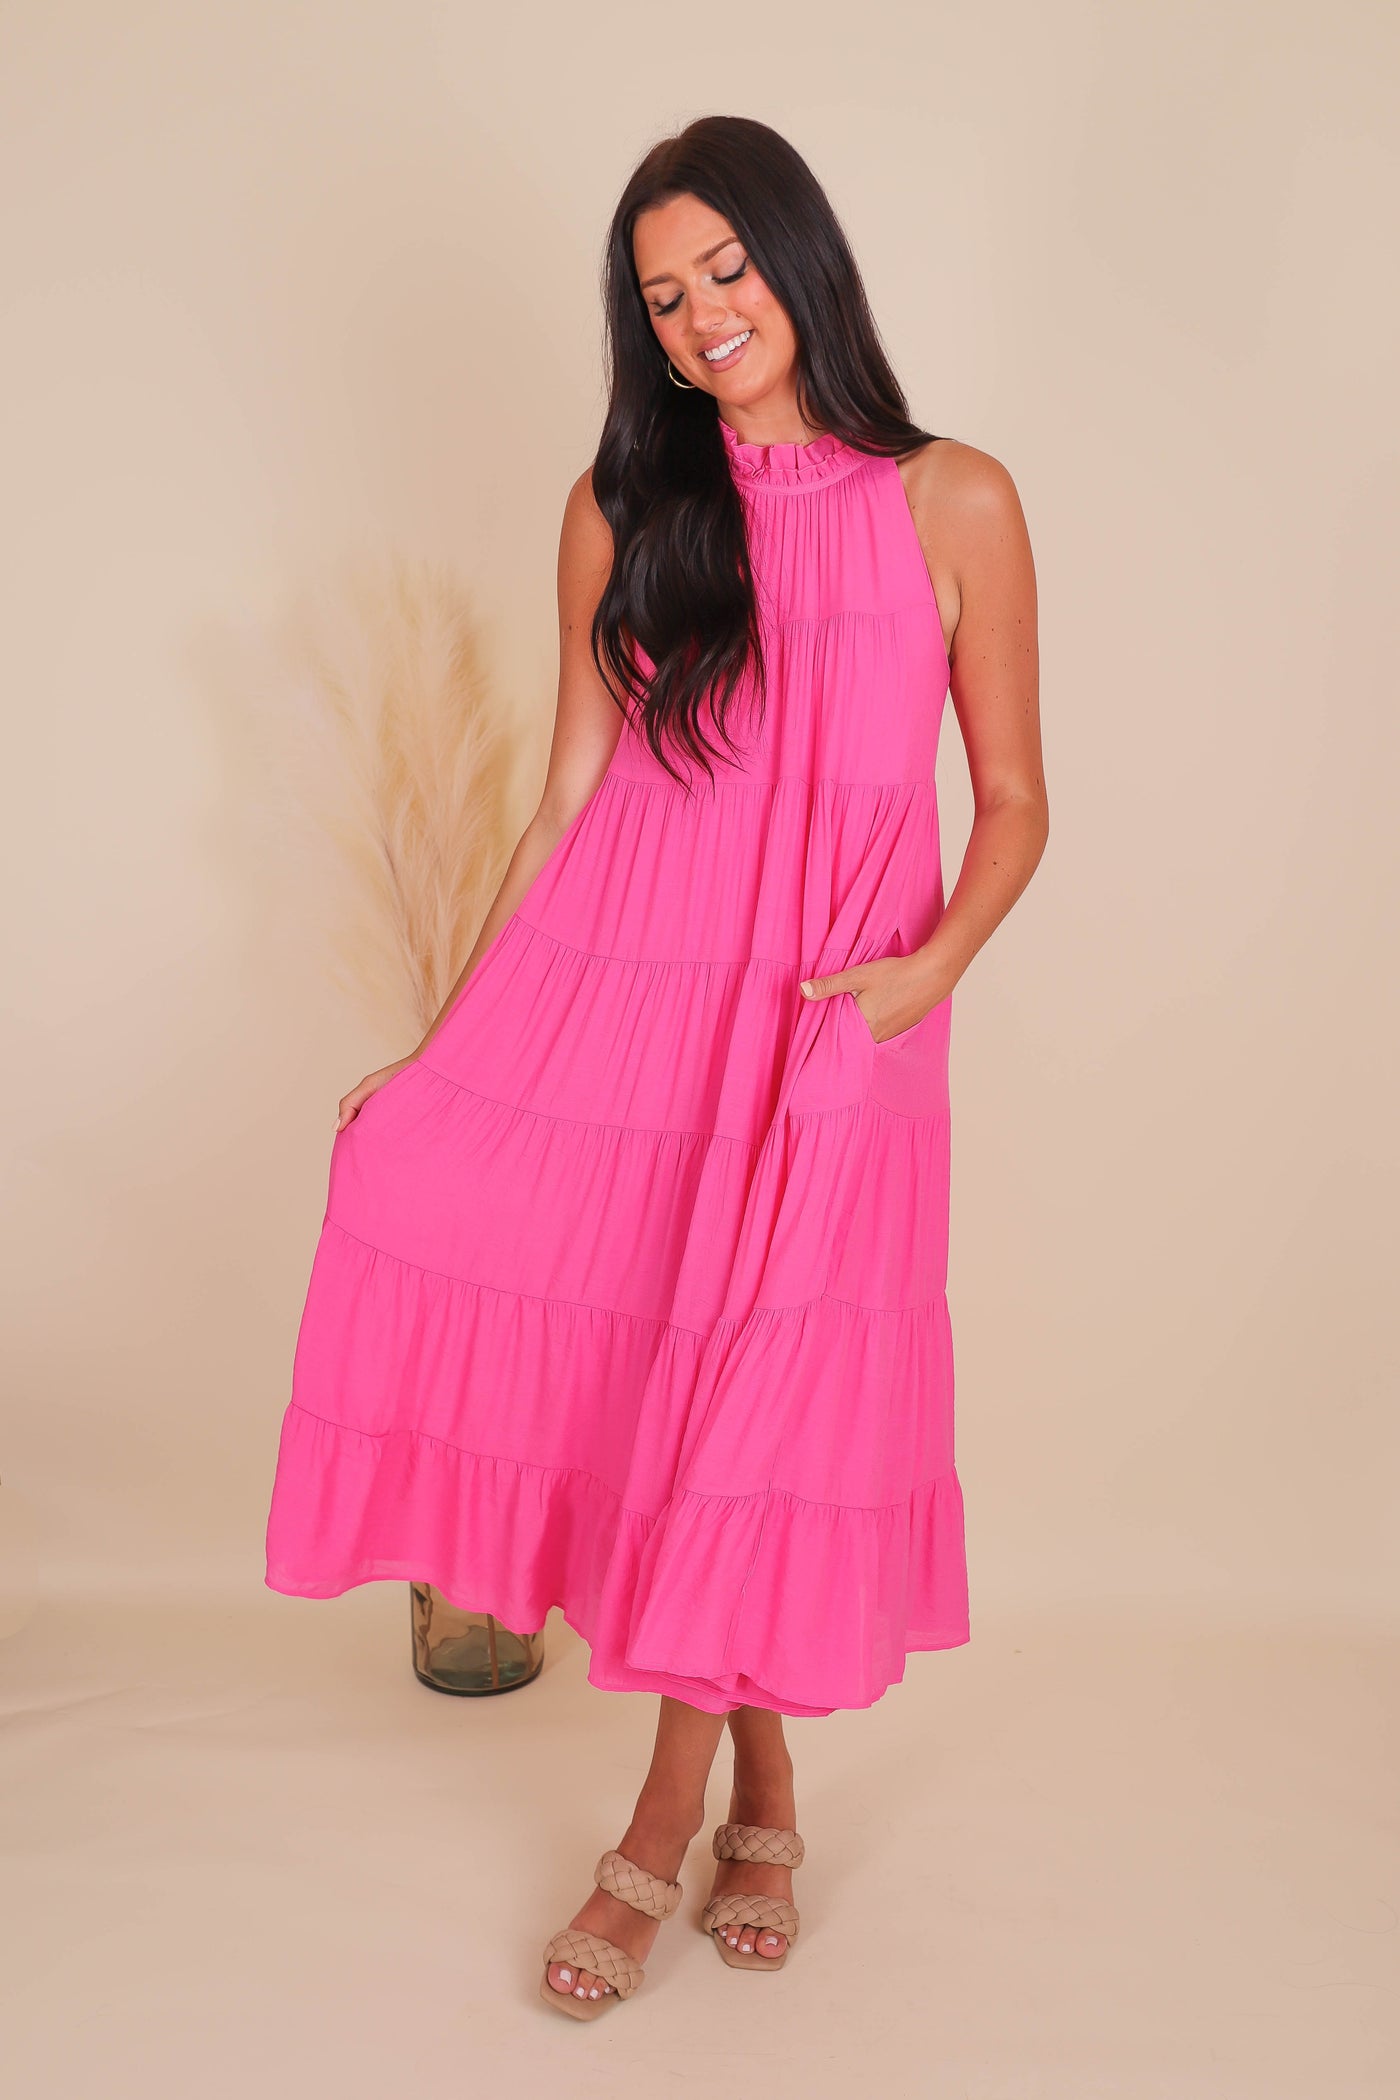 Setting Sail Maxi Dress-Chic High Neck Maxi Dress- Pink Tiered Maxi- Entro Maxi